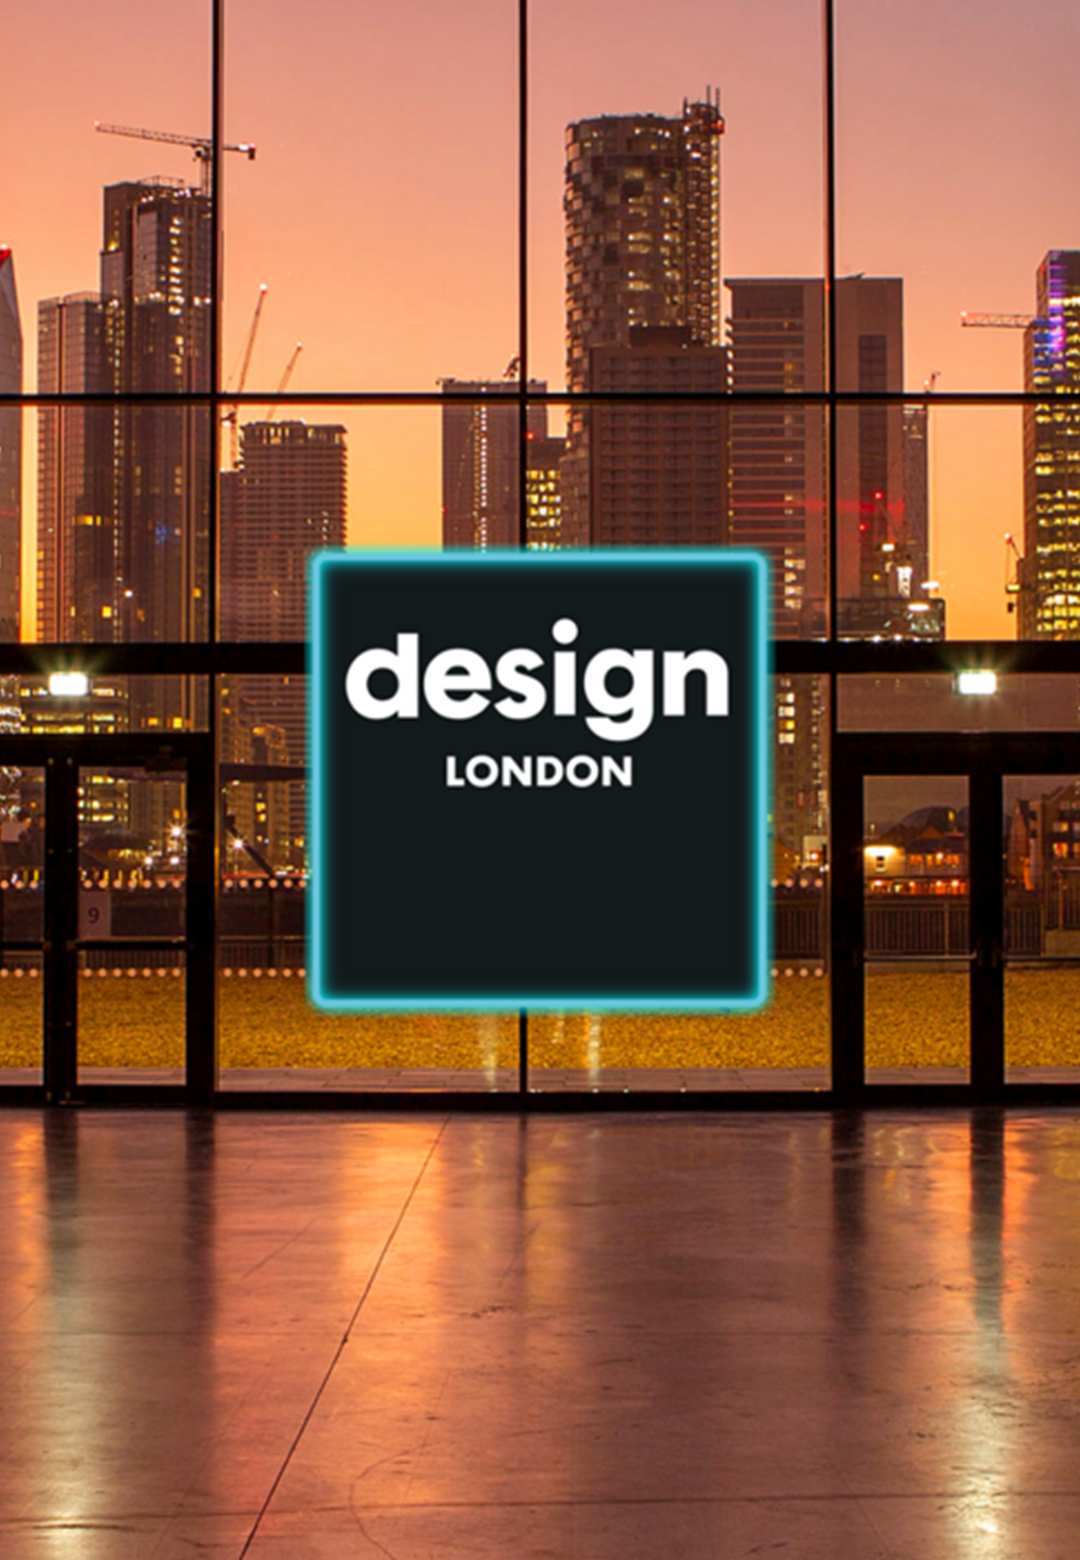 Design London debuts at London Design Festival 2021